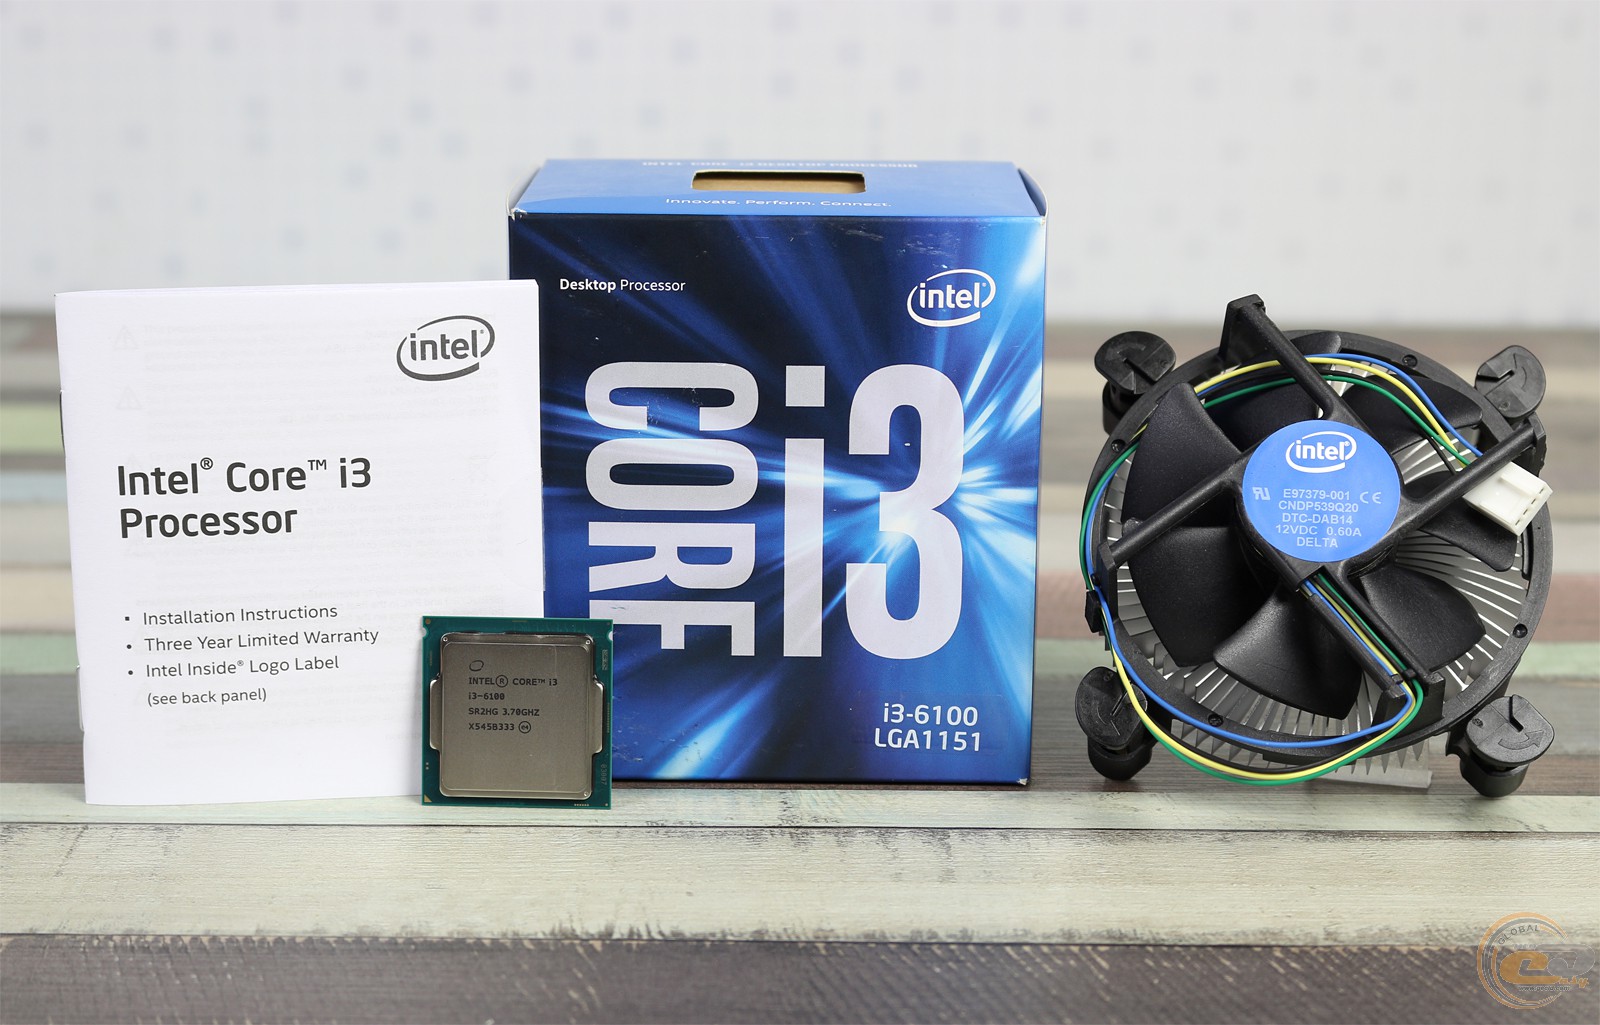 Intel 3 pro. Процессор Интел i3\6100. Intel Core i3-8100 Intel. Intel Core i3 6100 CPU. Intel Core i3-6100 lga1151, 2 x 3700 МГЦ.